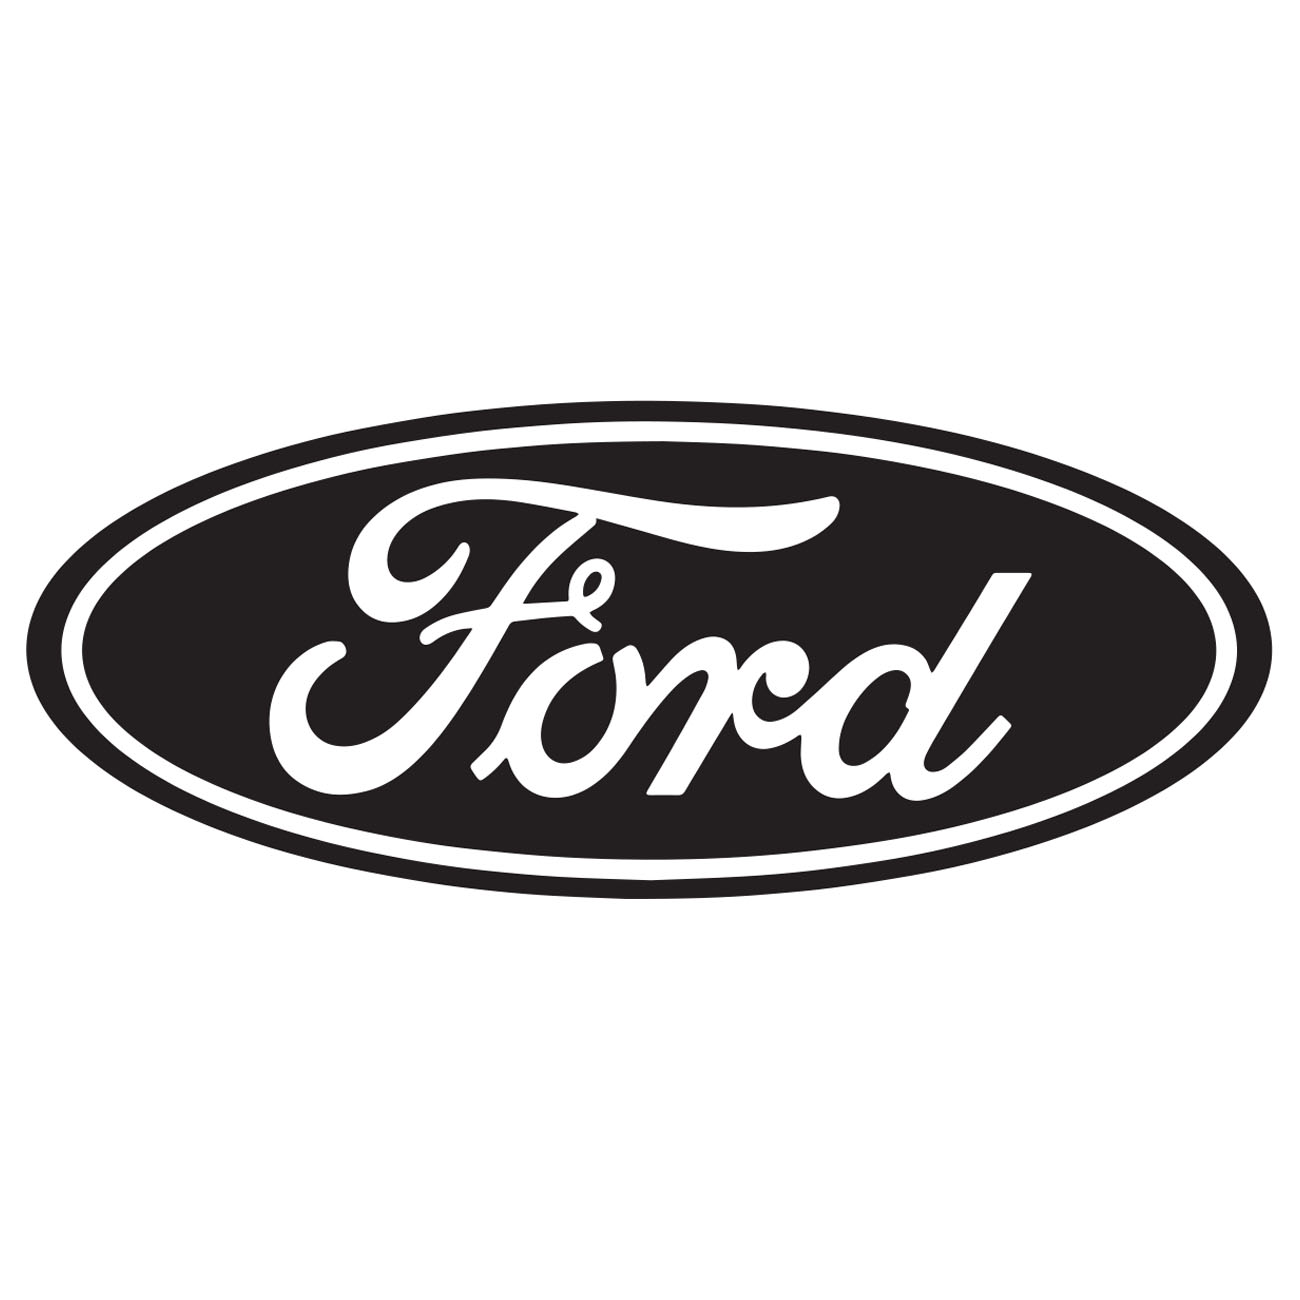 Ford logo.jpg